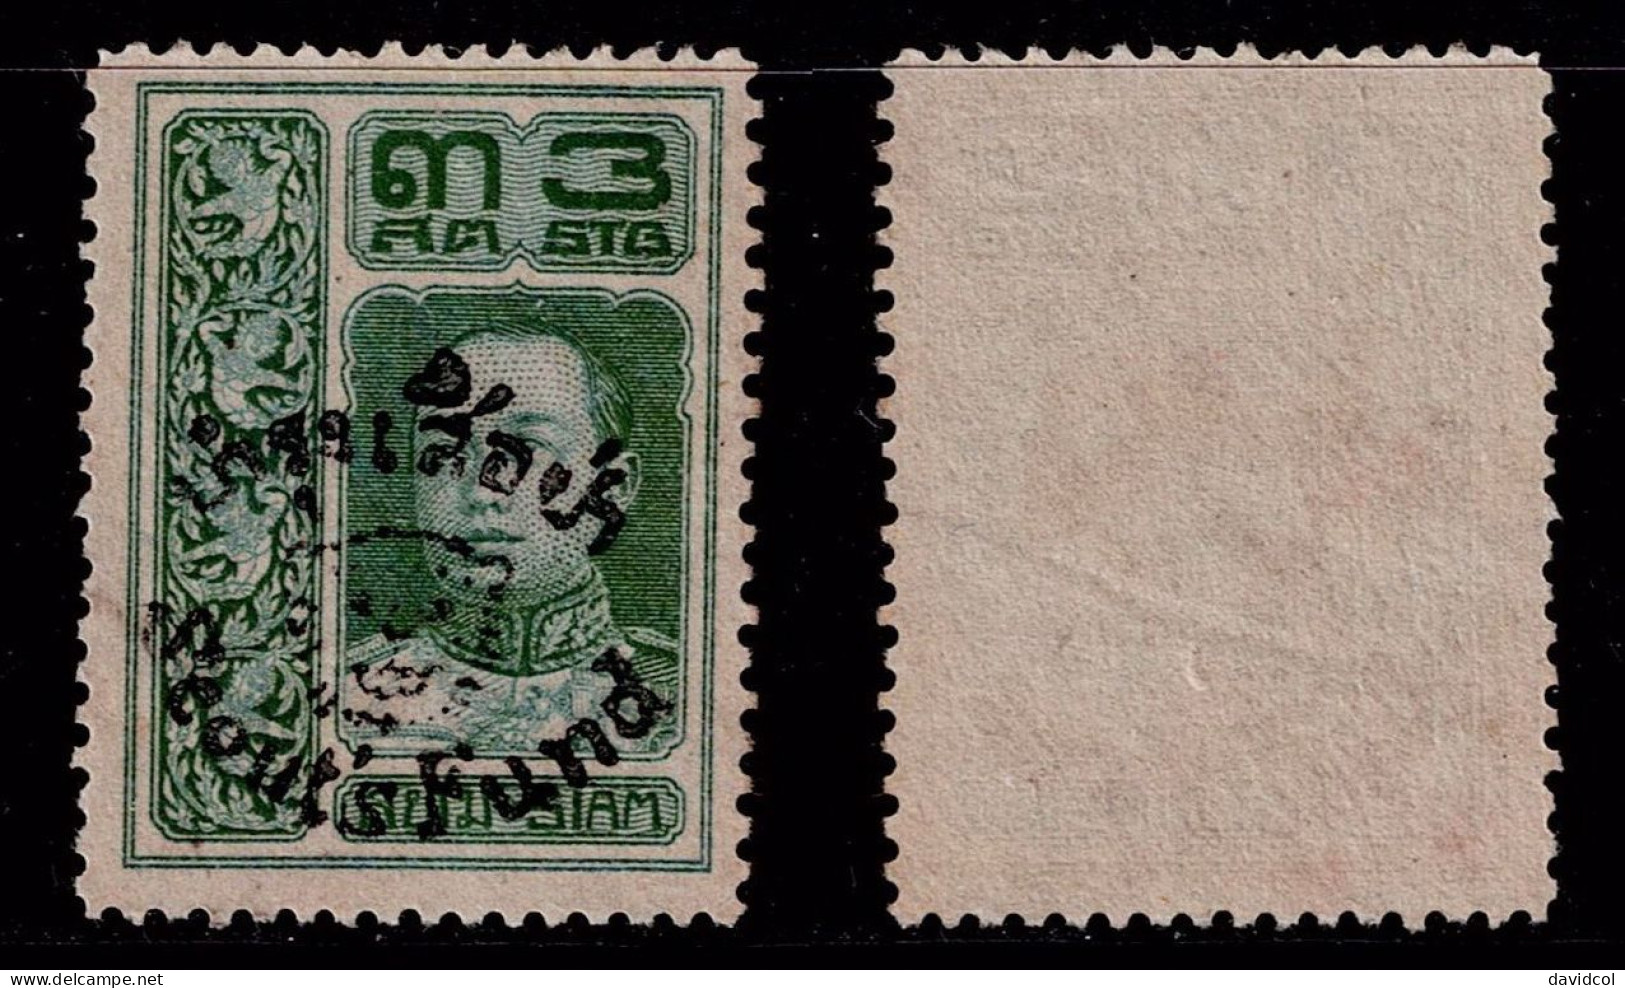 2901B- SIAM / THAILAND - 1920 - SC#: B19 USED- SCOUTS FUND OVPTD - KING VAJIRAVUDH - Siam